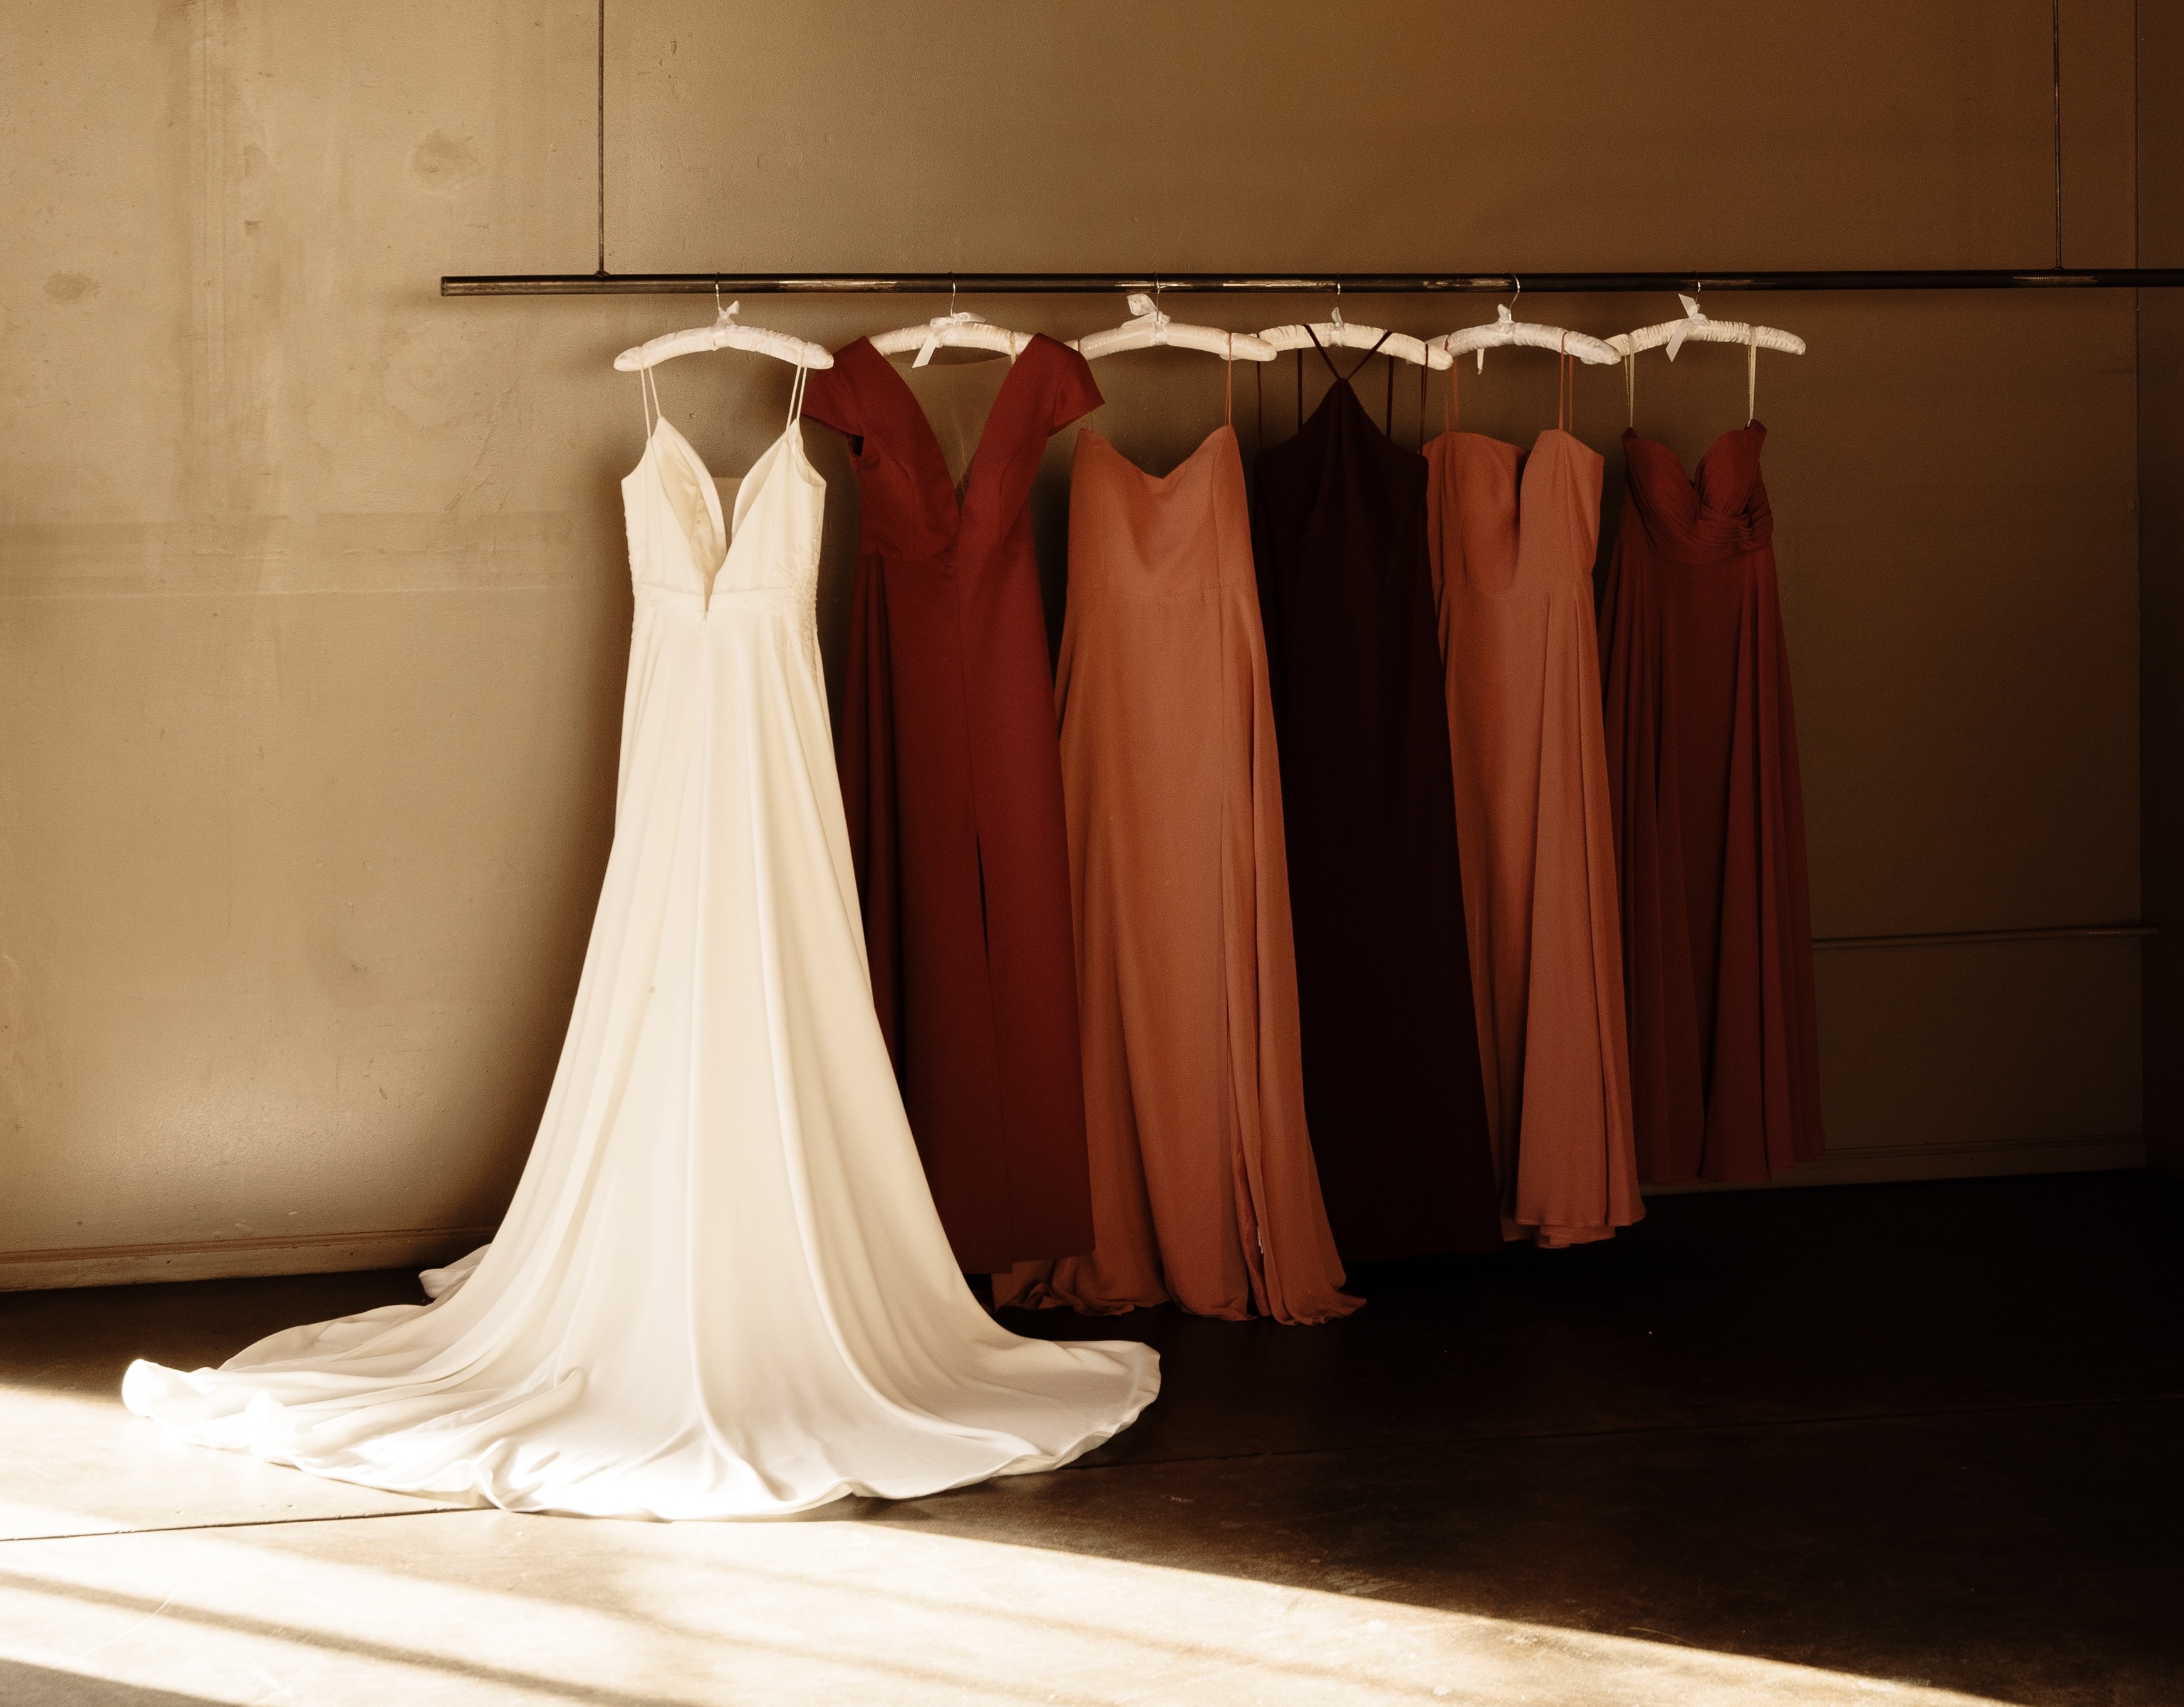 Guide to Wedding Dress Lengths - Zola Expert Wedding Advice